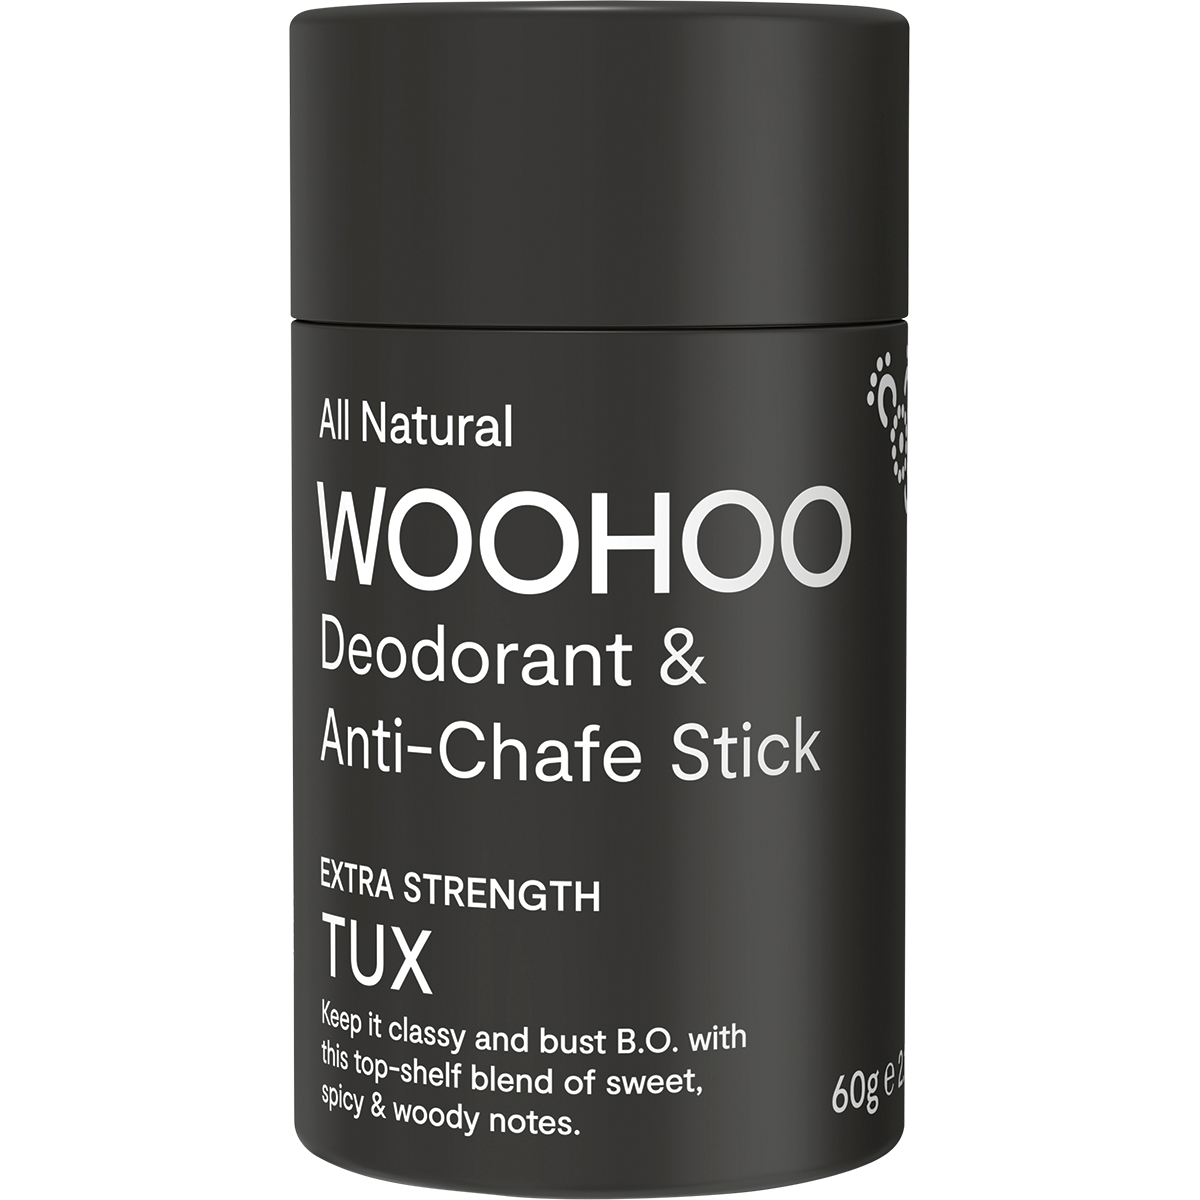 Woohoo Natural Deodorant & Anti-Chafe Stick Tux (Extra Strength) 60g